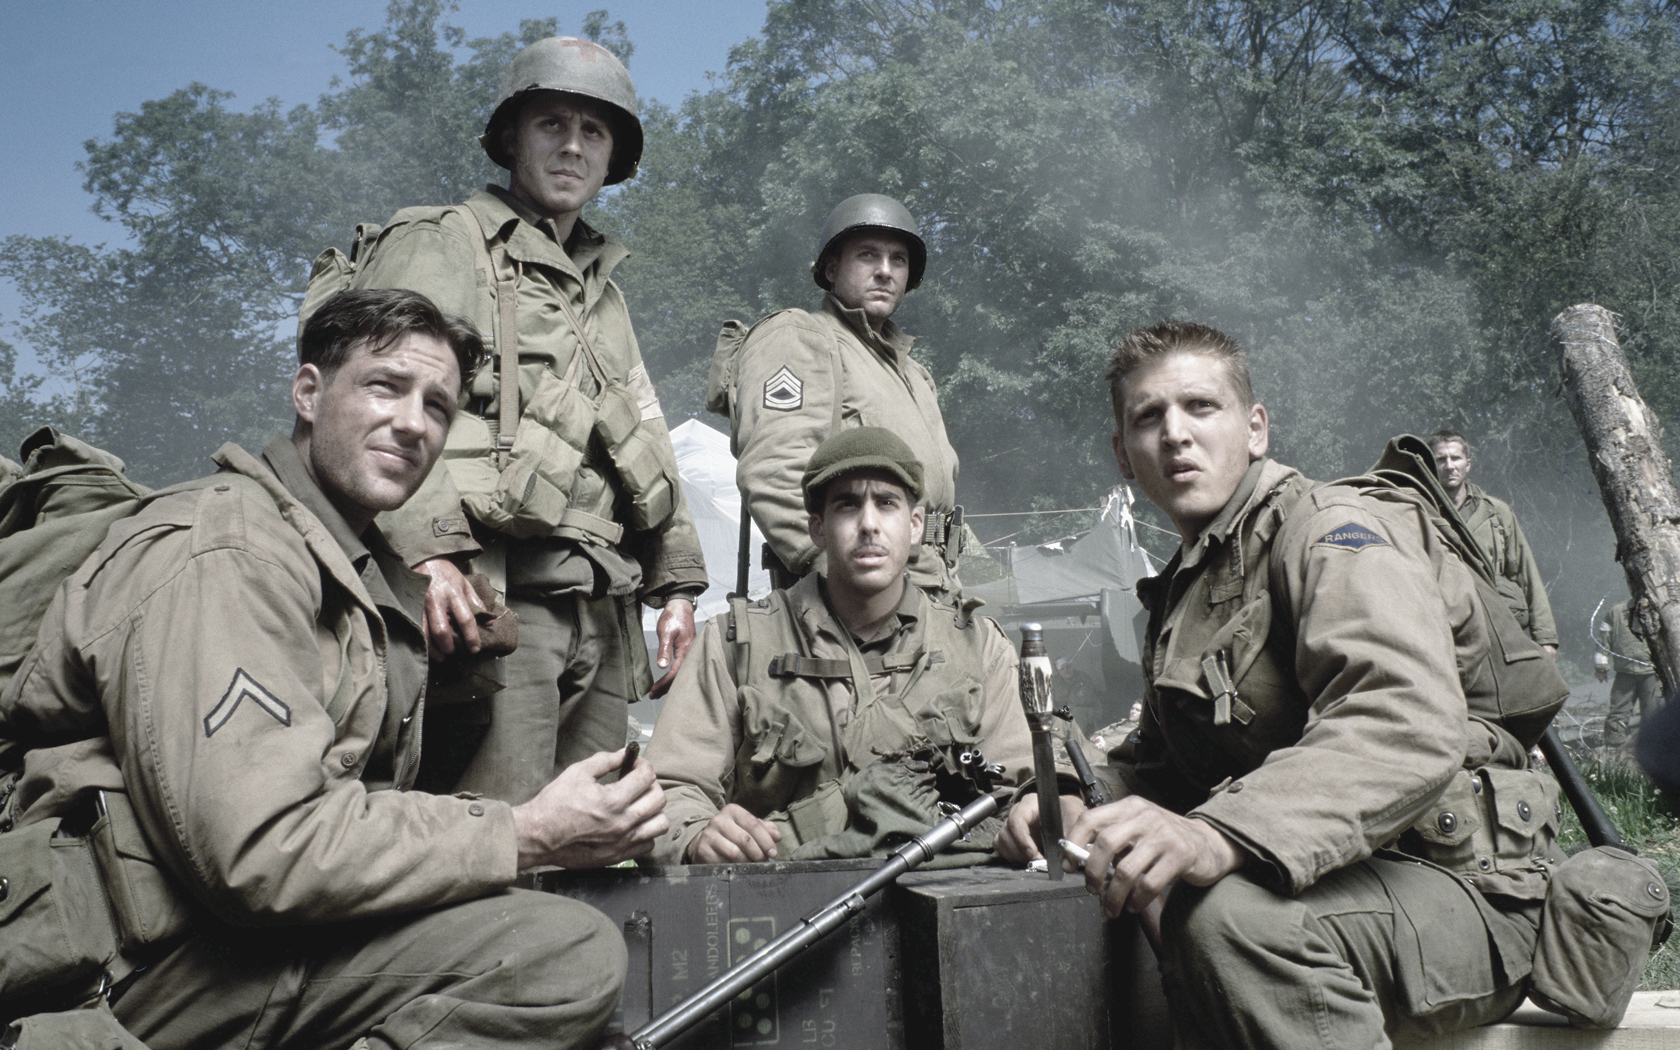 Saving Private Ryan Documentary: Vintage Footage of Preparing for War